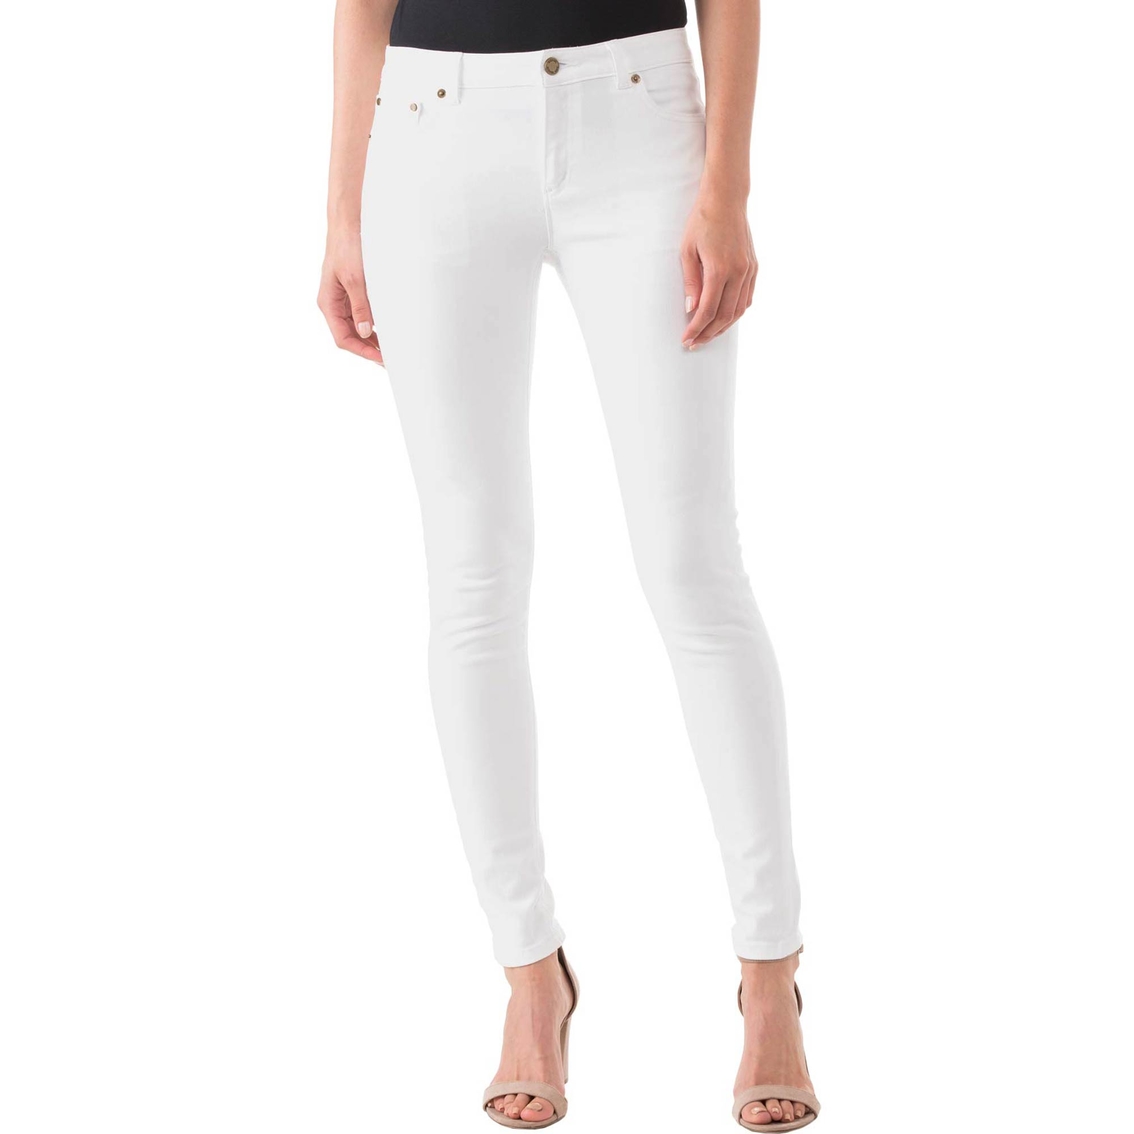 Michael Kors Petite Selma Skinny Jeans | Jeans | Clothing & Accessories ...